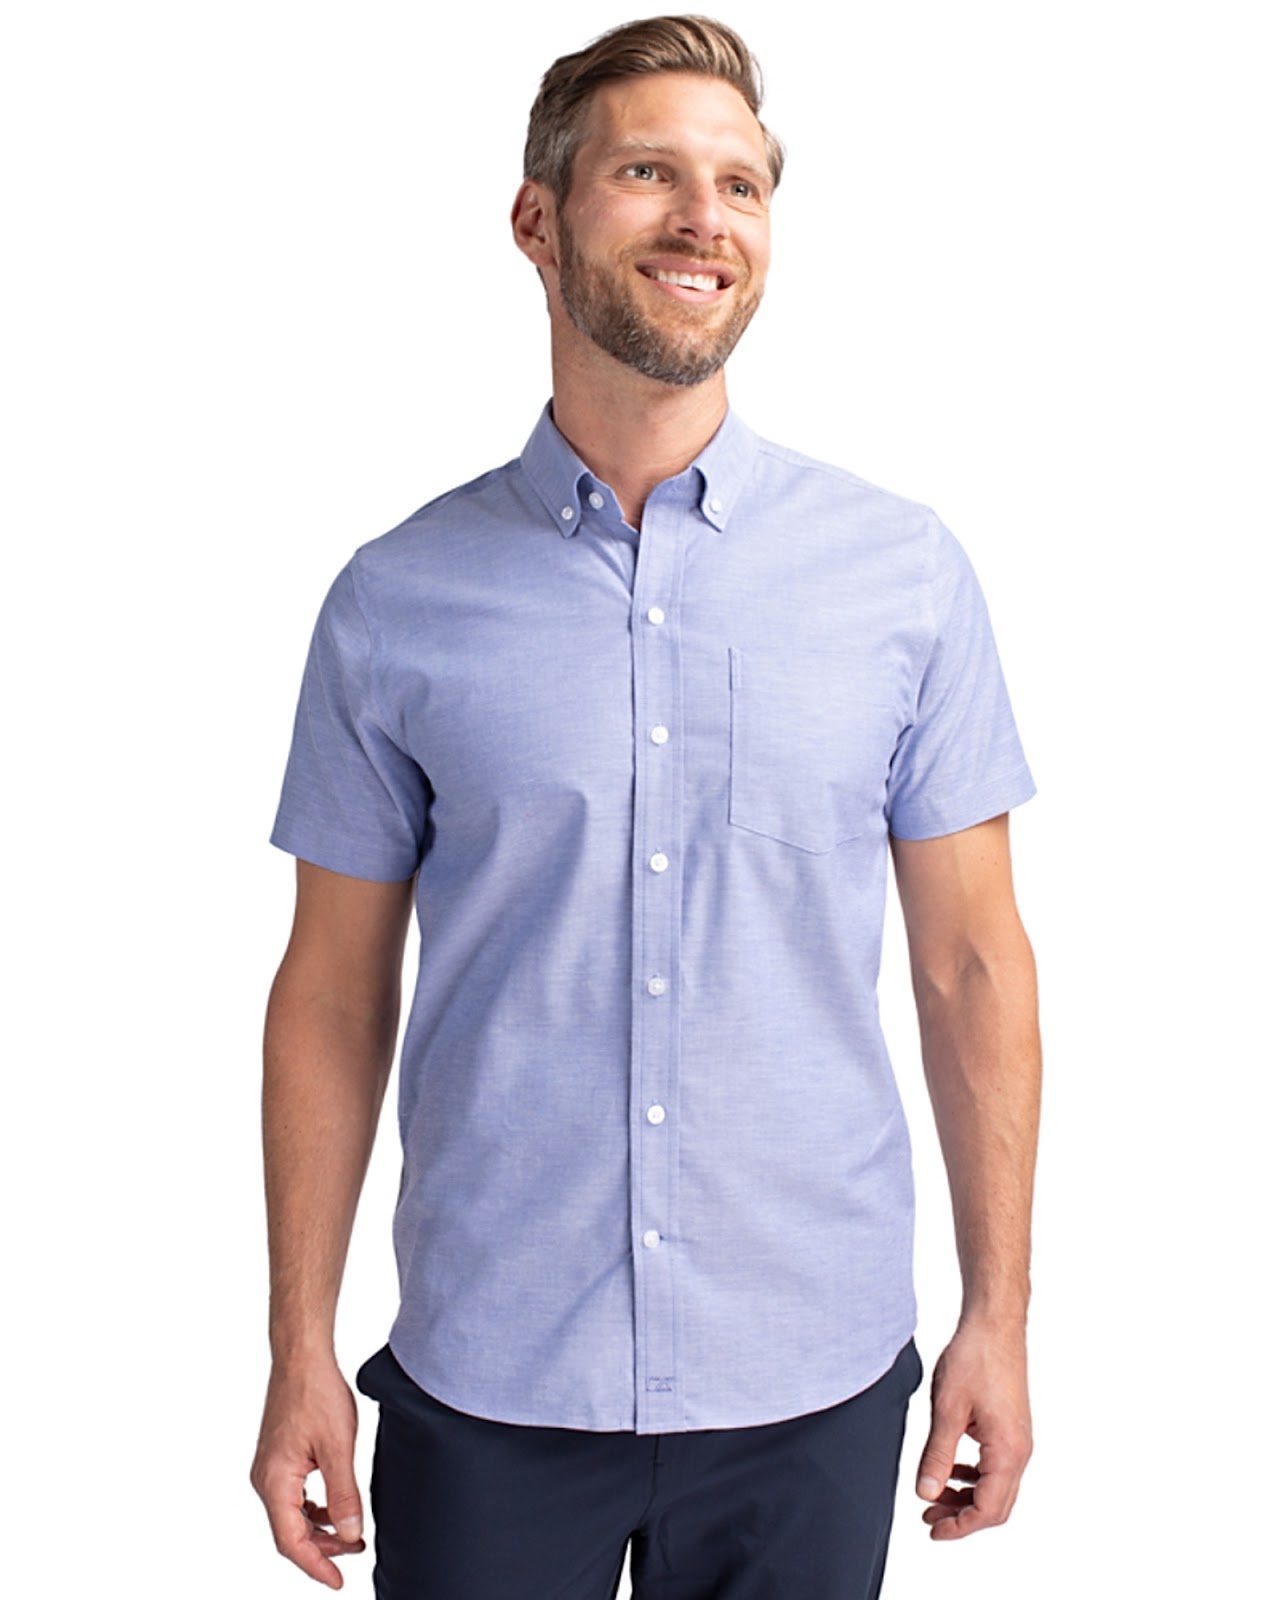 Cutter & Buck Stretch Oxford Men’s Short Sleeve Dress Shirt in French Blue